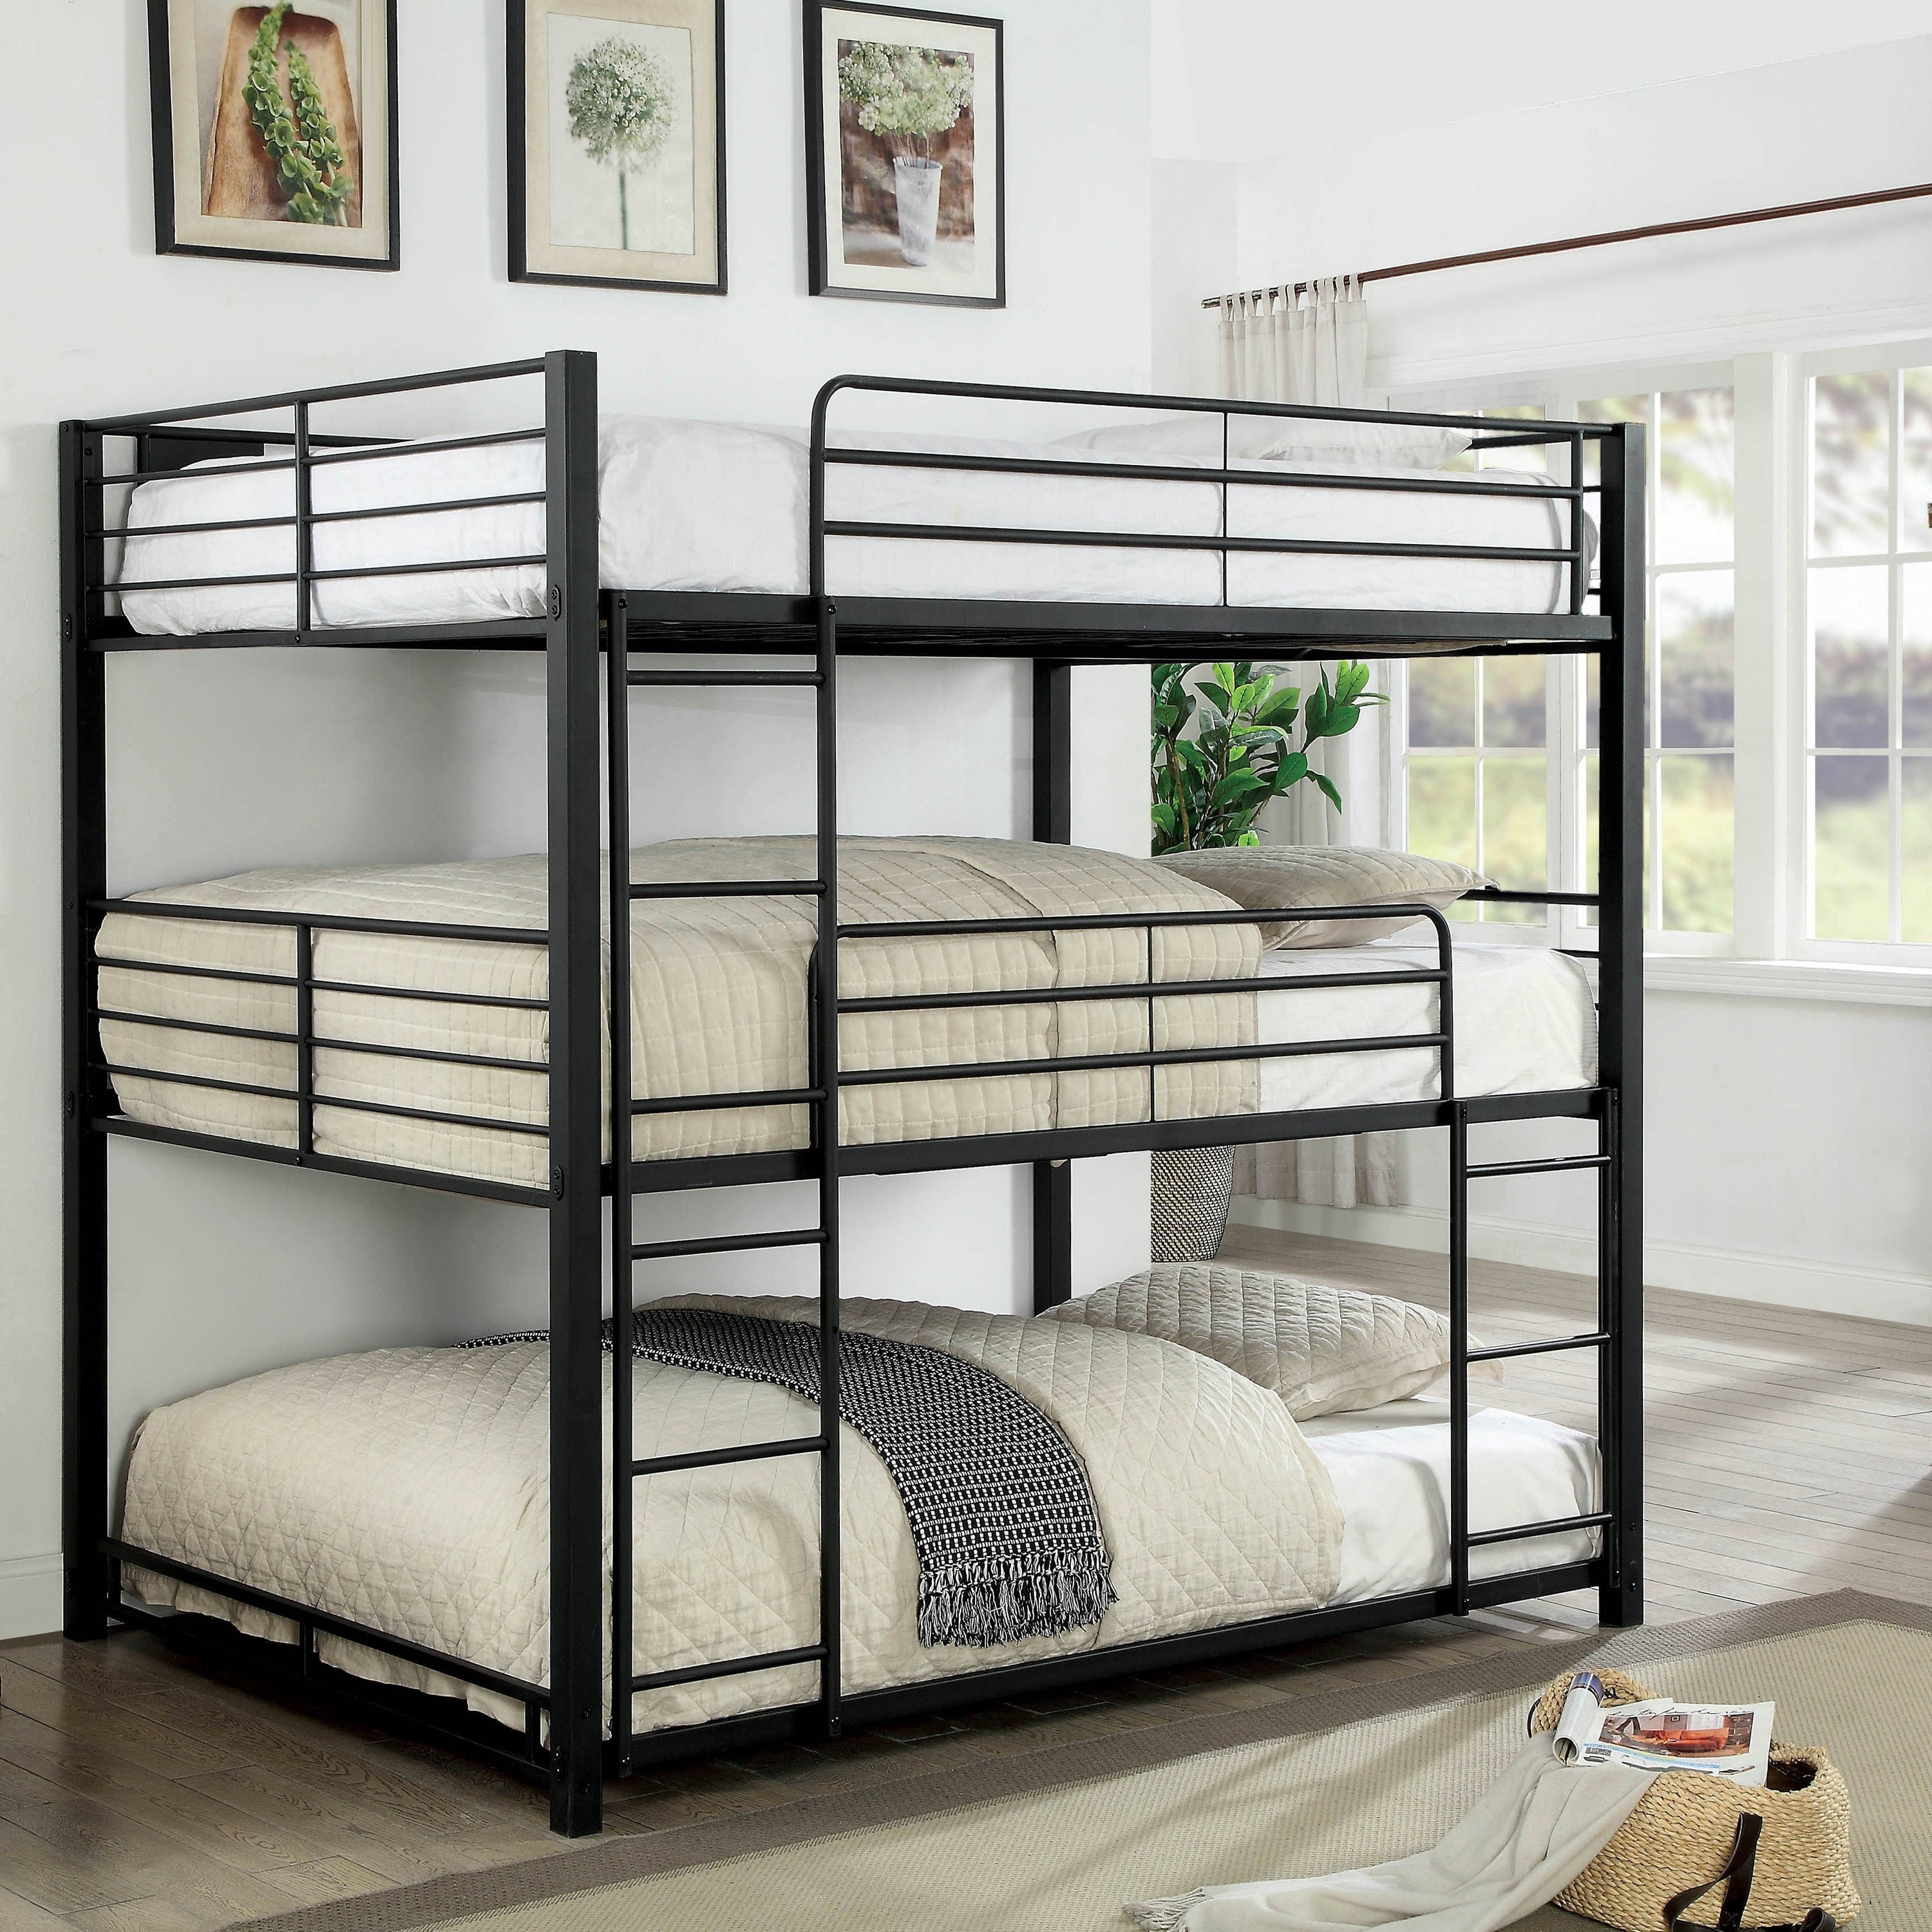 triple decker bed design